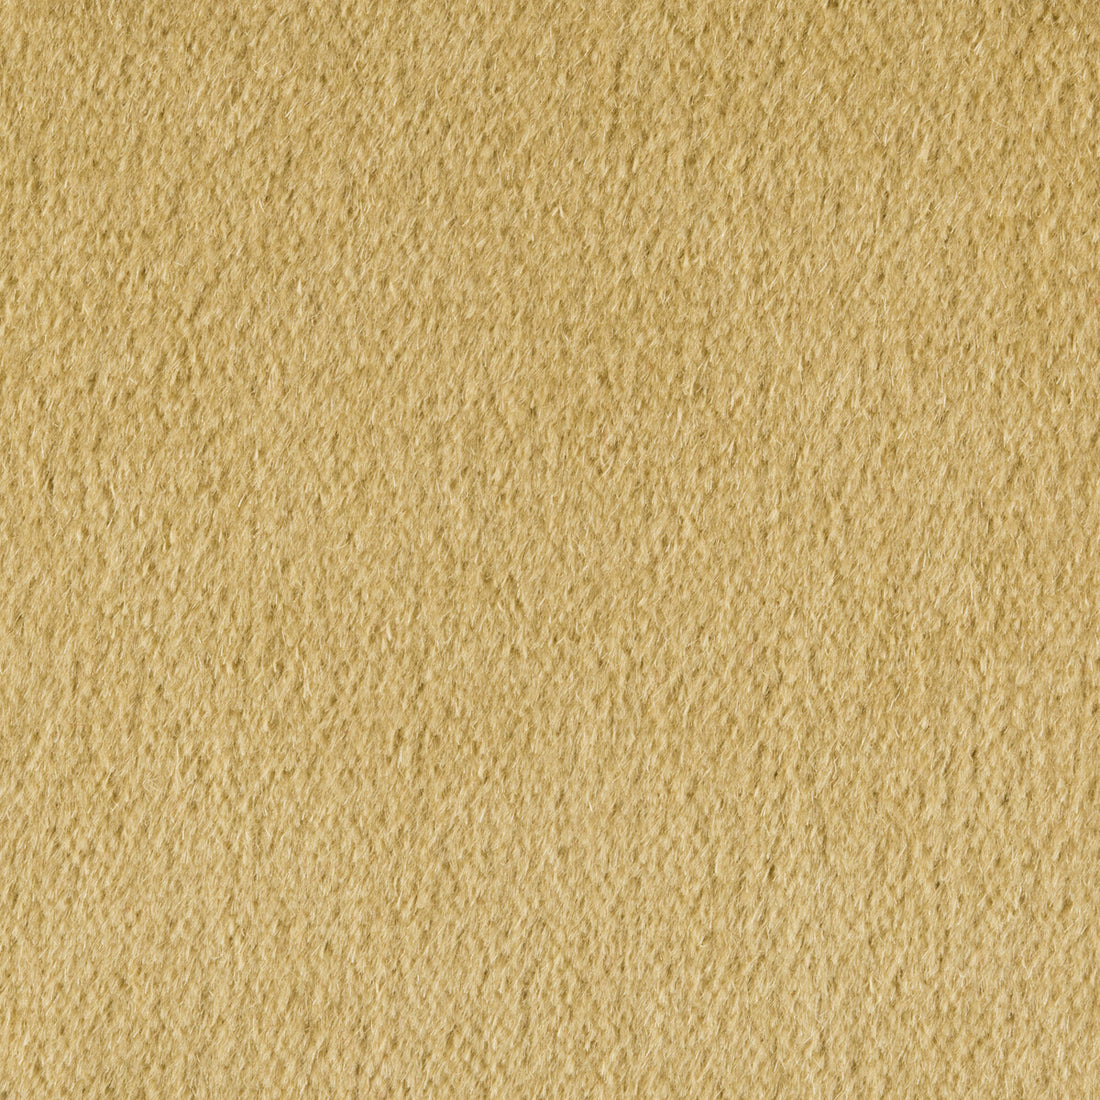 Autun Mohair Velvet fabric in lichen color - pattern BR-89778.405.0 - by Brunschwig &amp; Fils